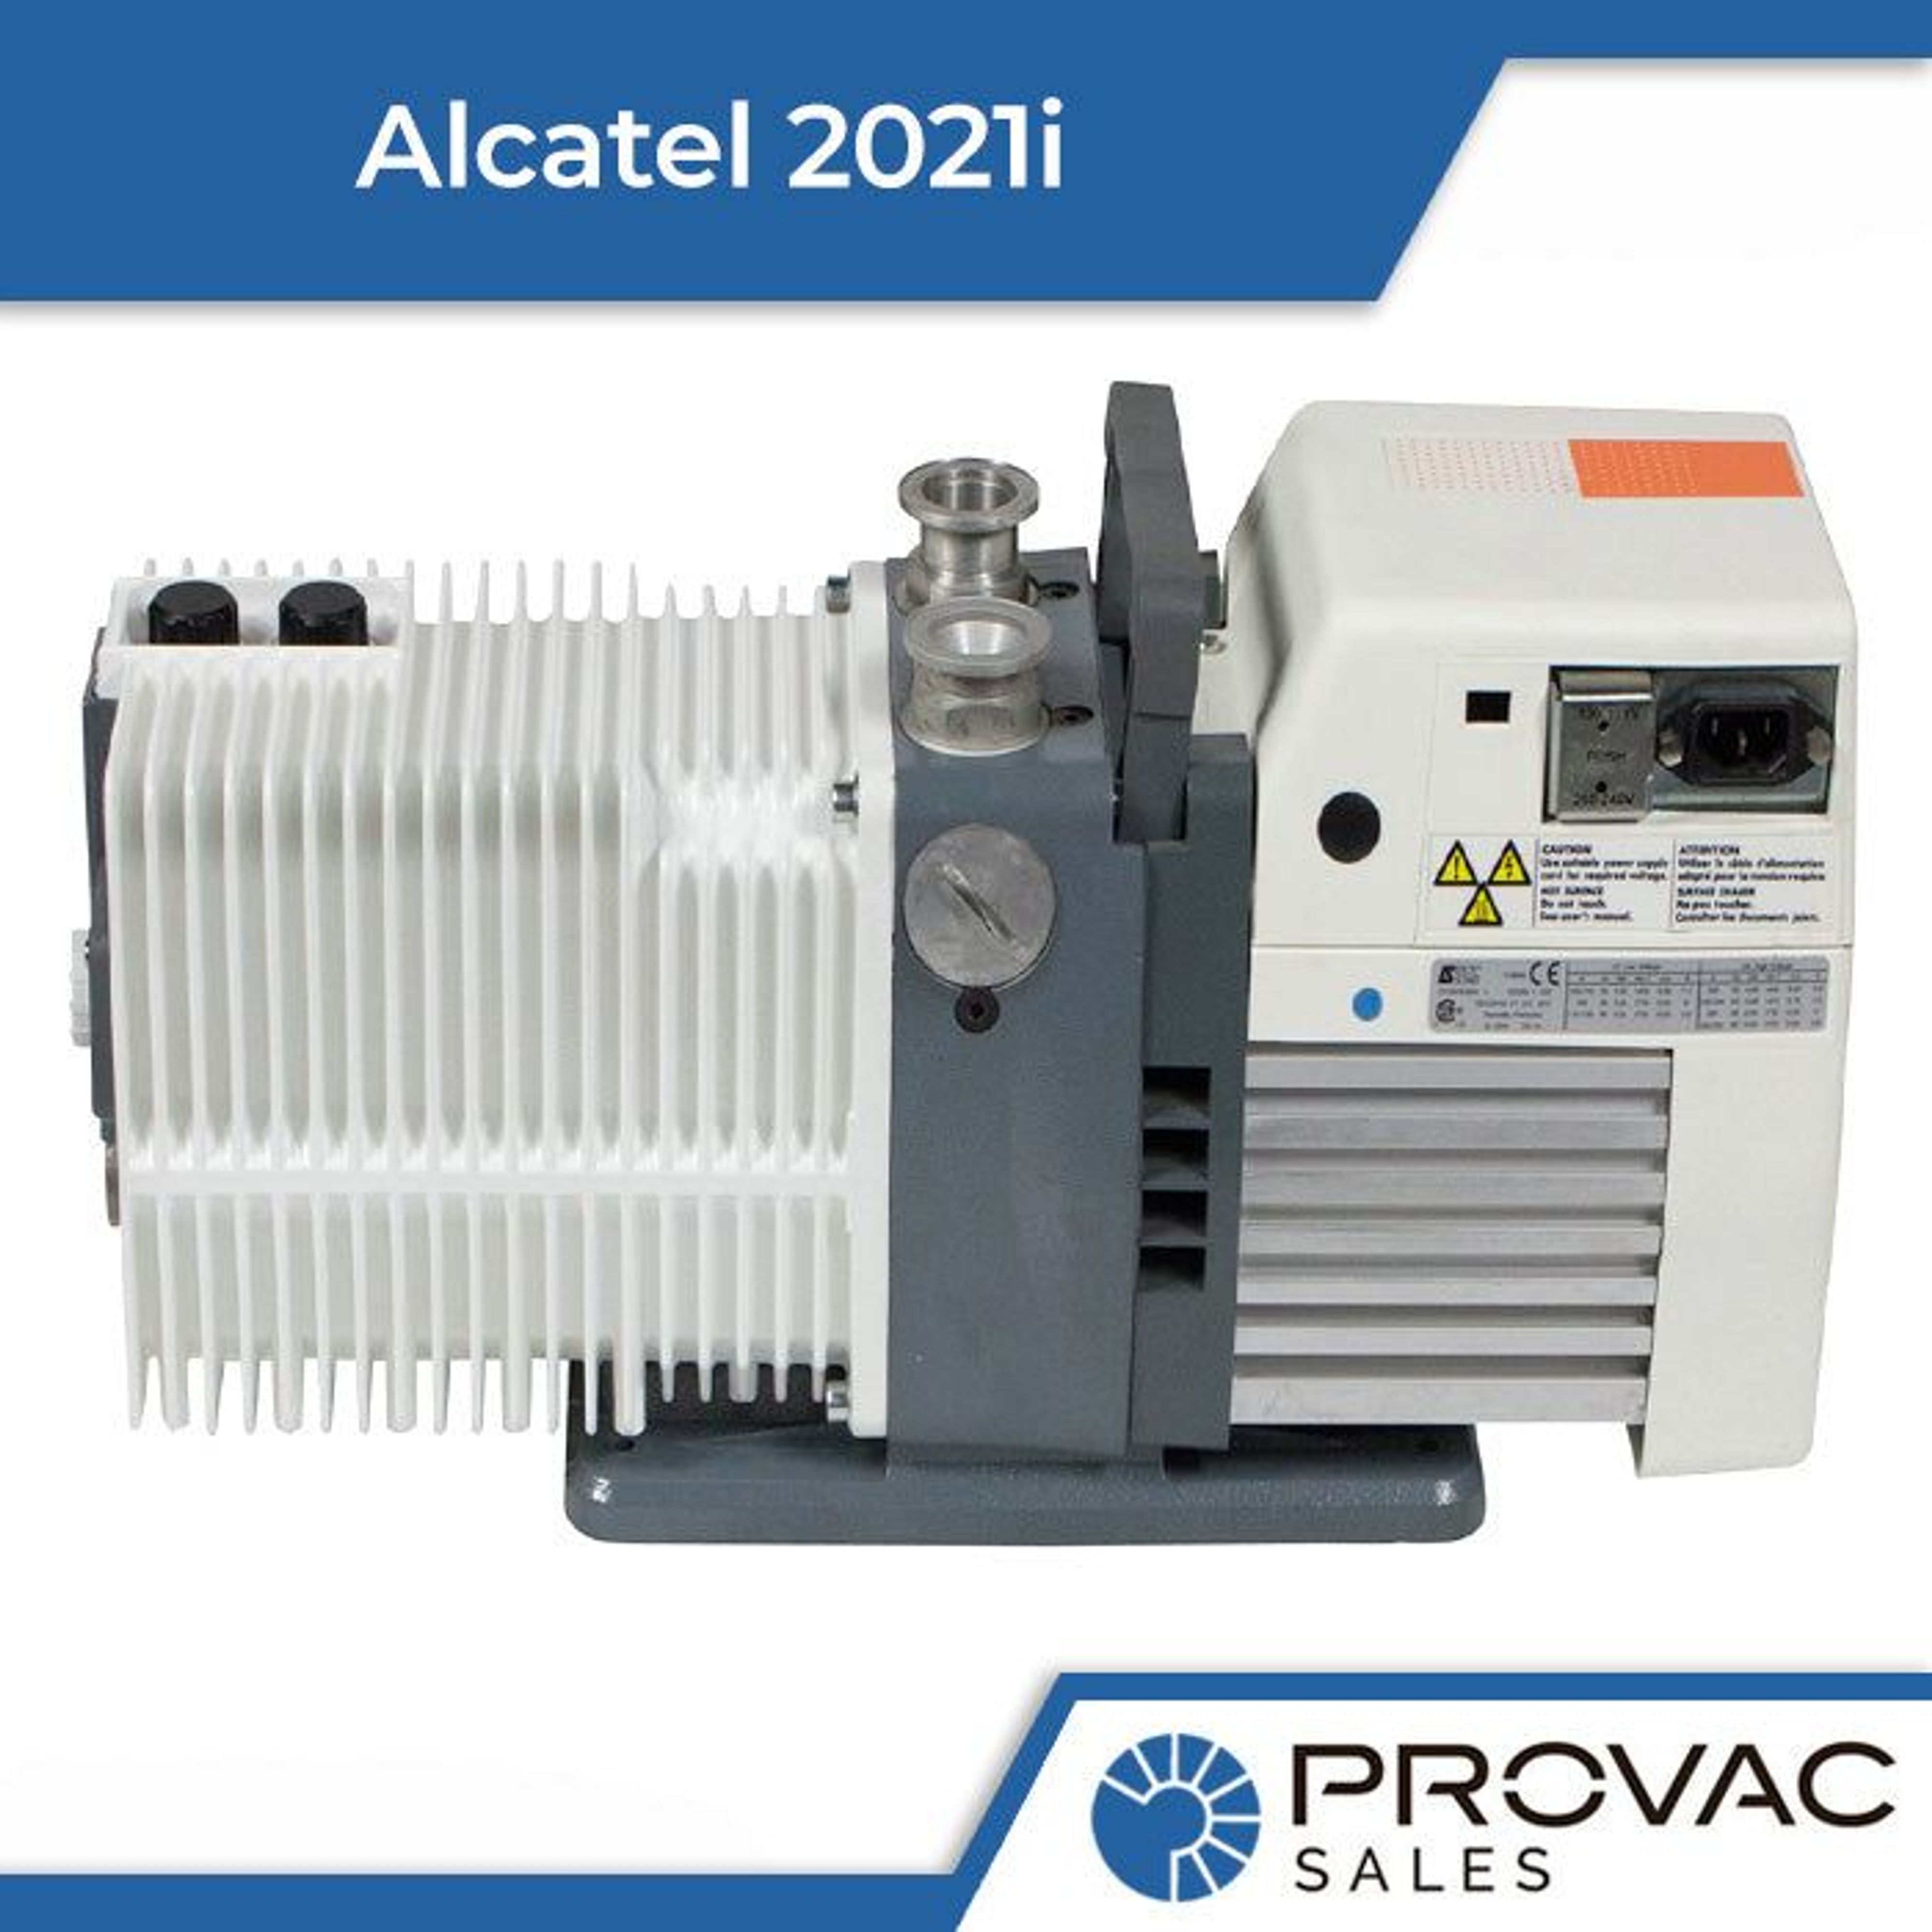 Alcatel 2021i Rotary Vane Pump Background